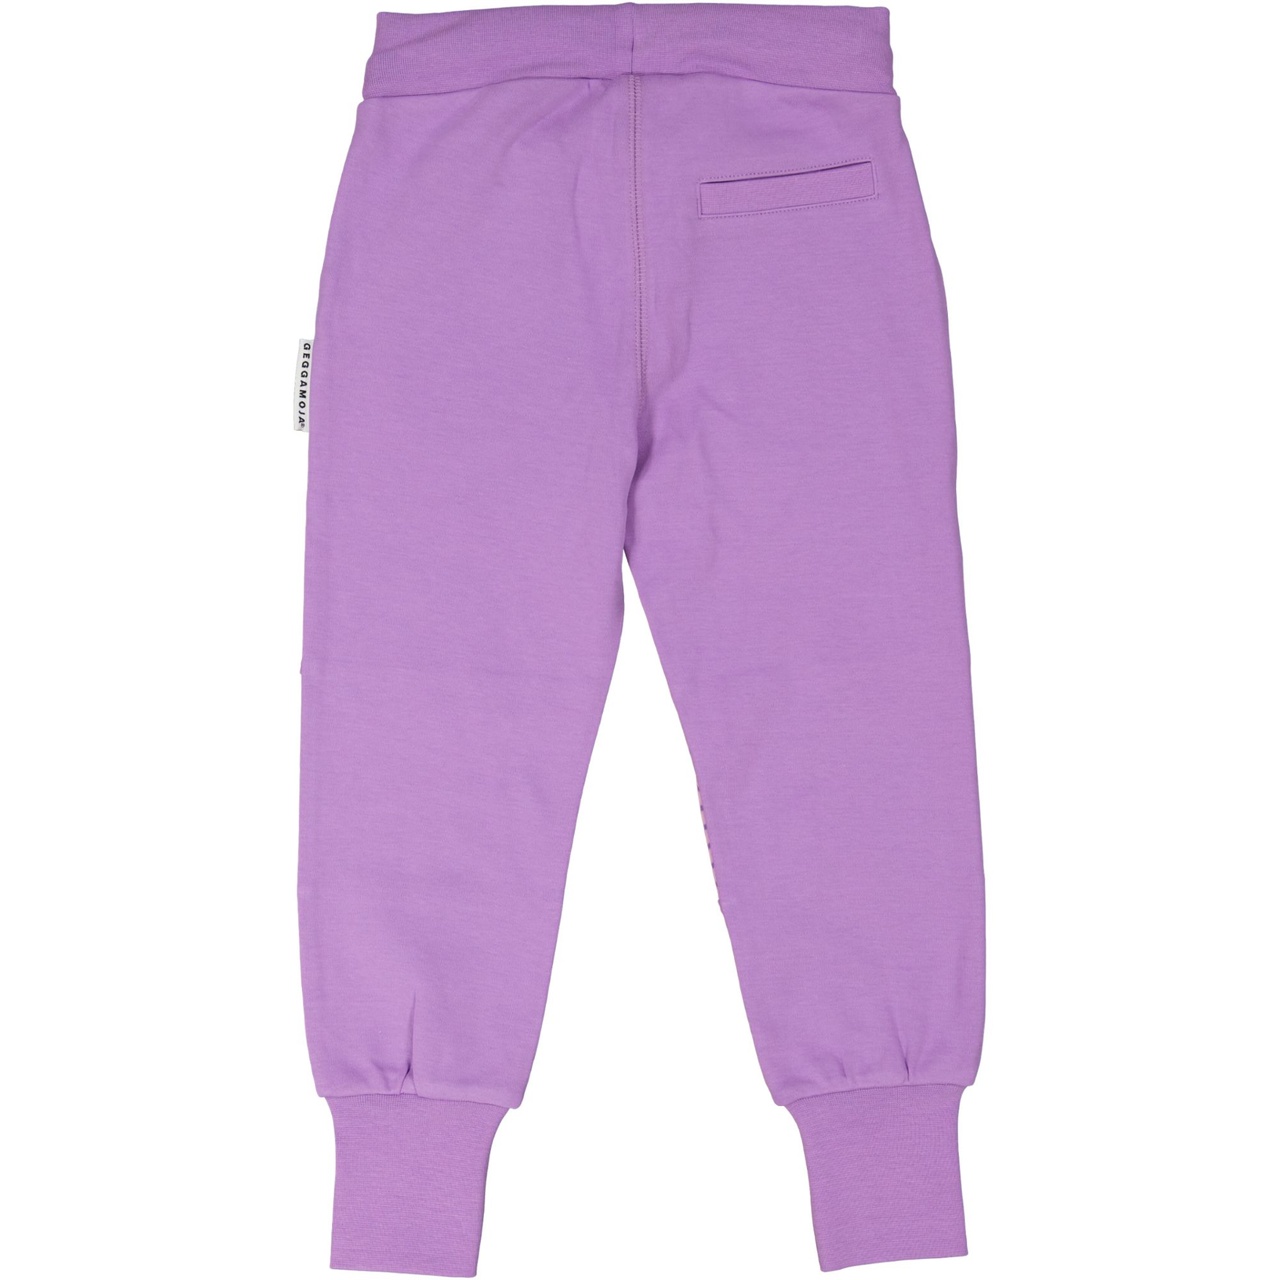 Long pants L.purple/purple  110/116